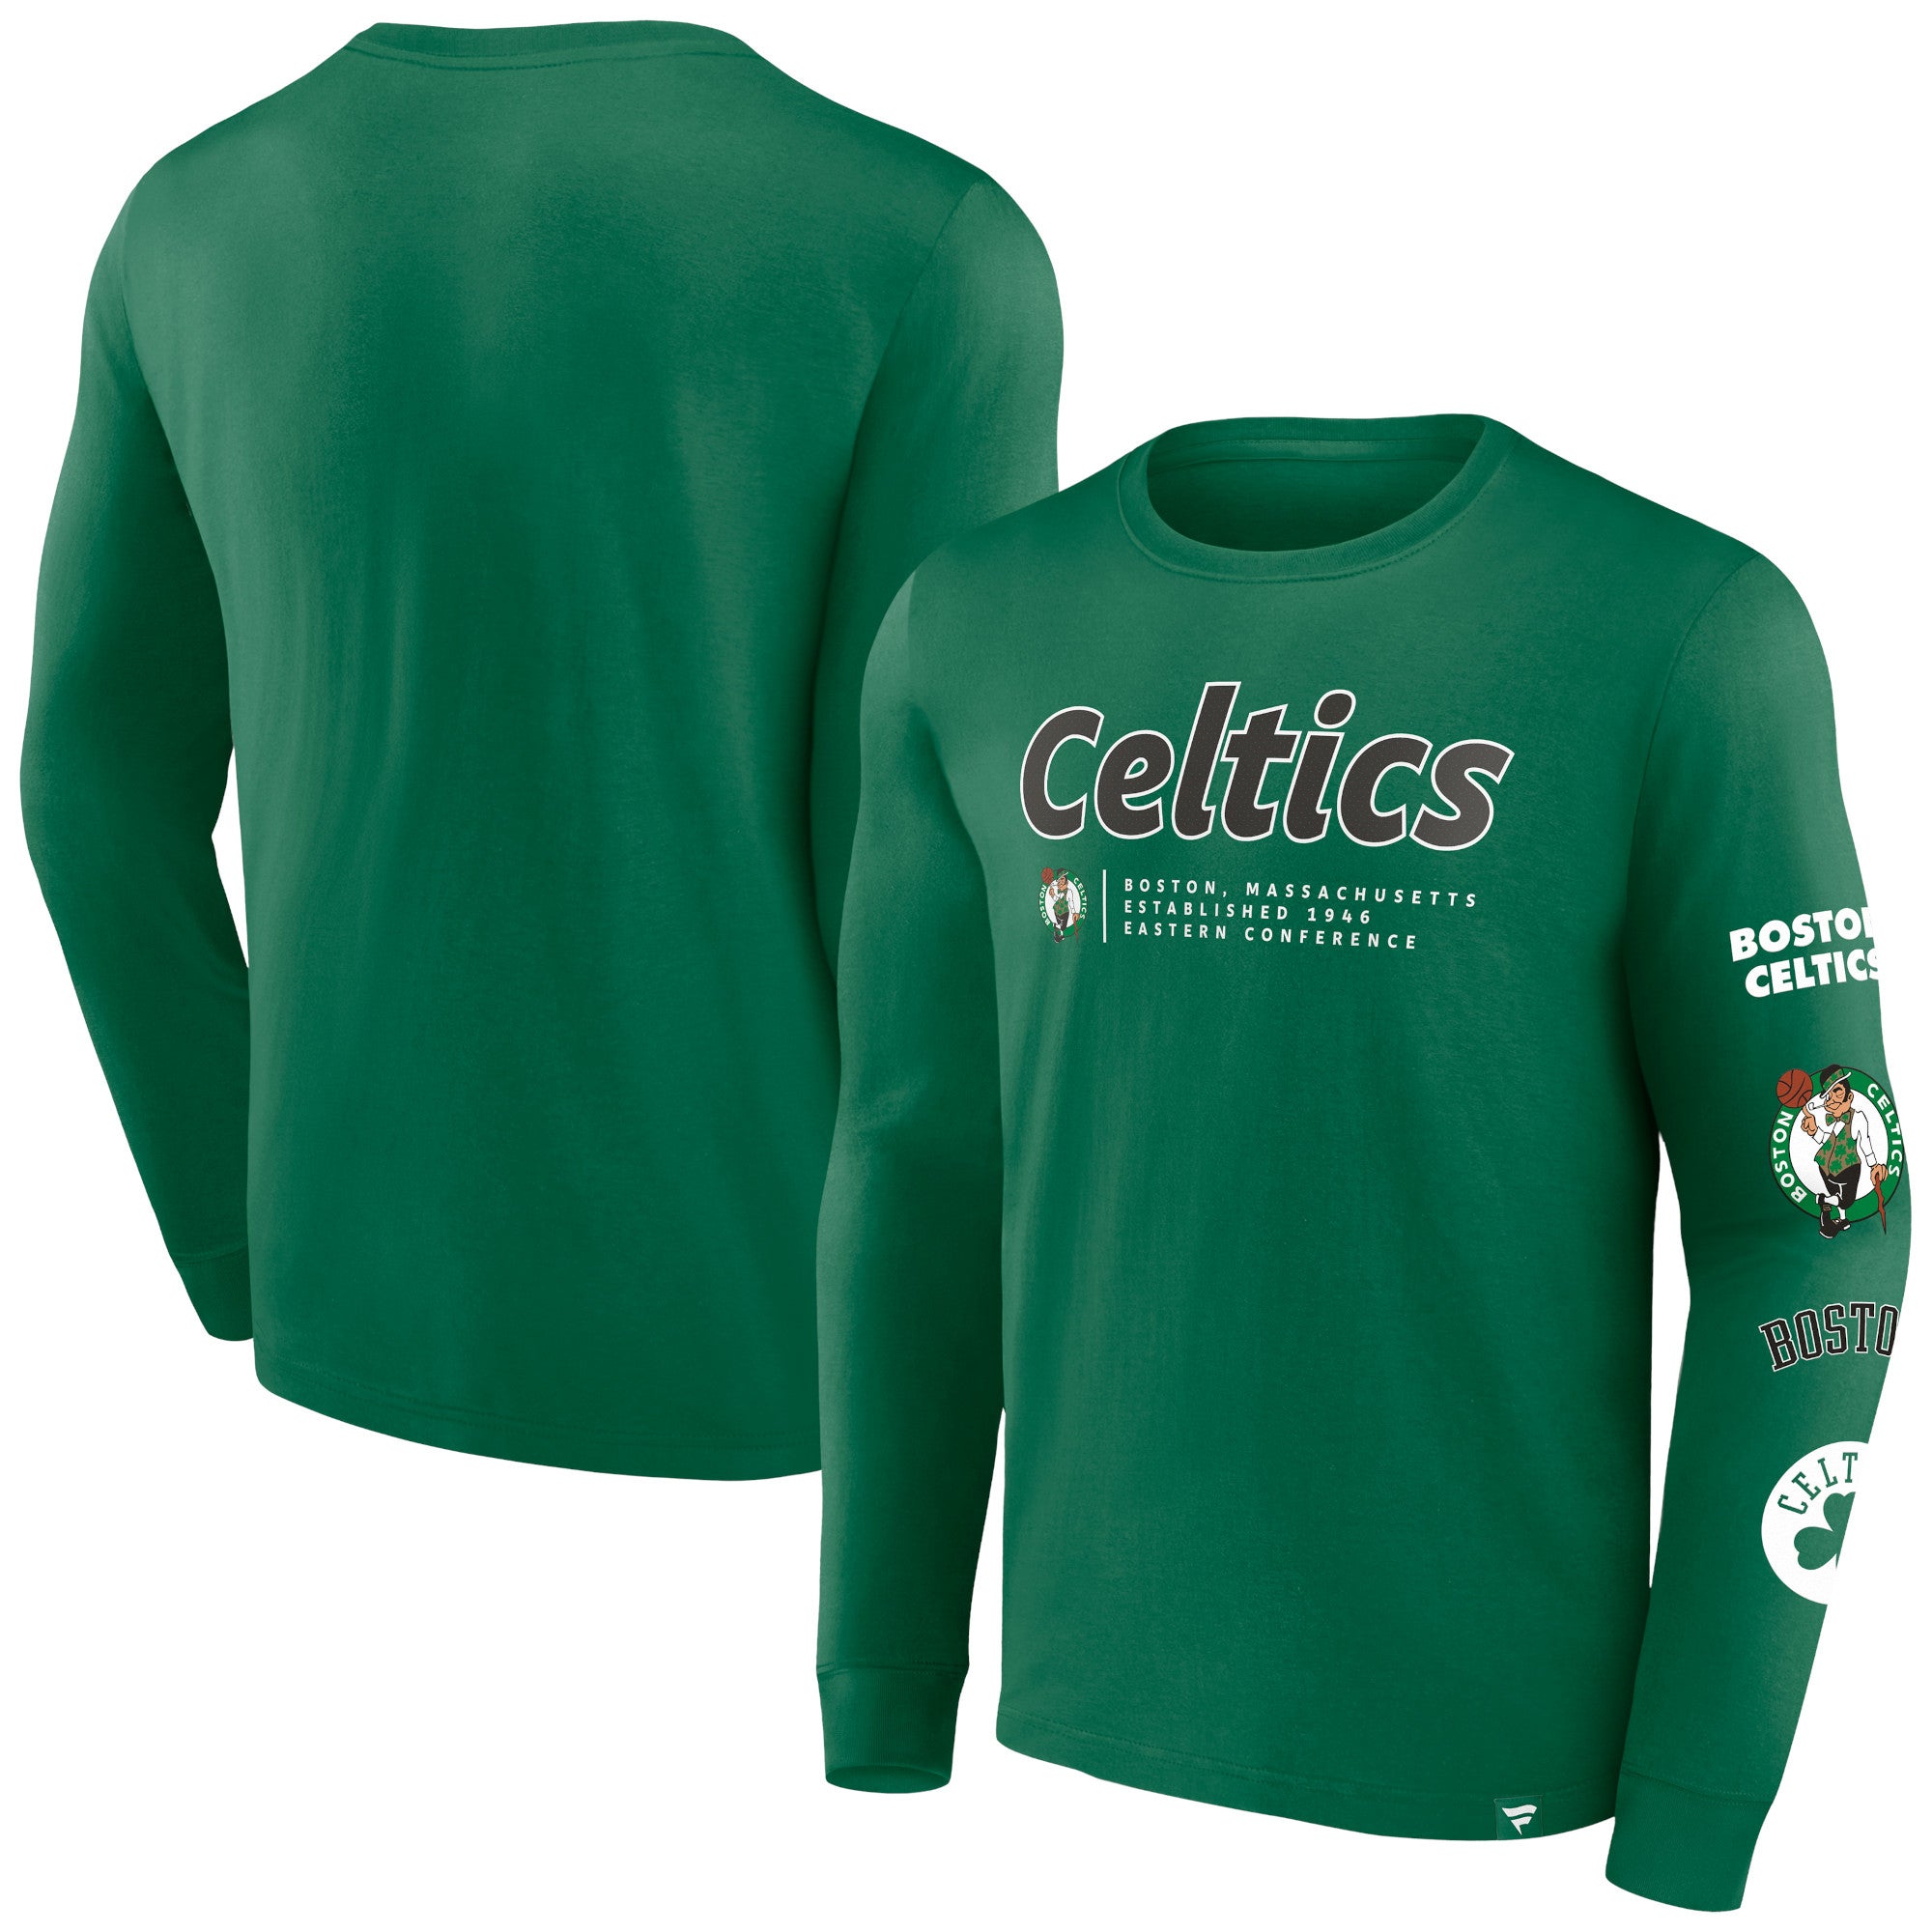 Fanatics Celtics Baseline Long Sleeve T-Shirt